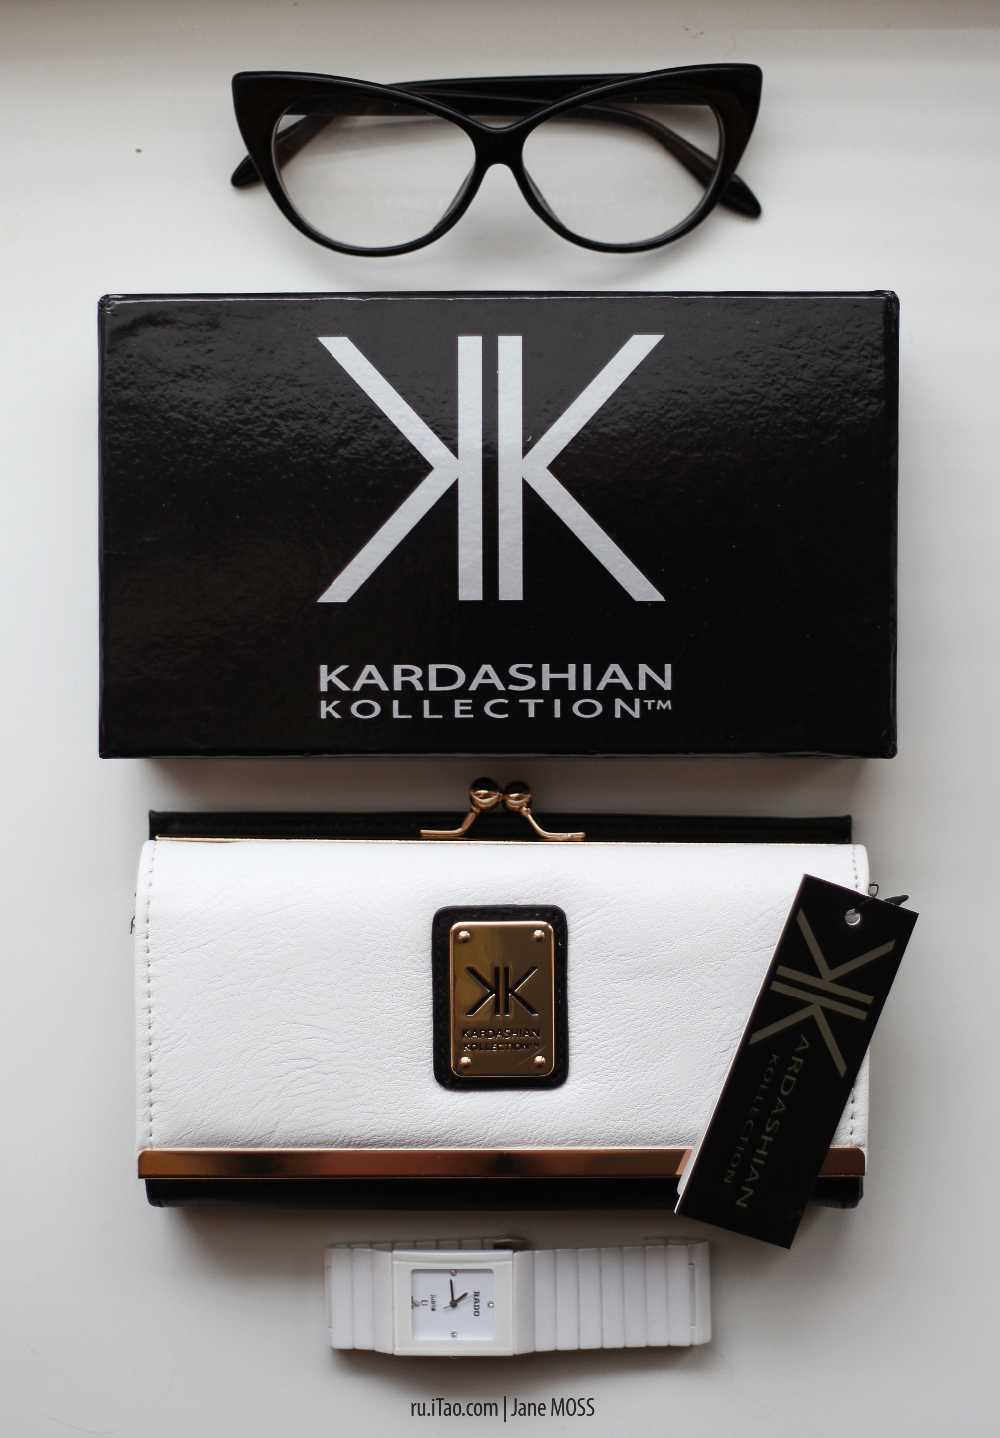 New 2014 High-quality Kardashian kollection long design Women Wallet Purse kk clutch bags high-grade women